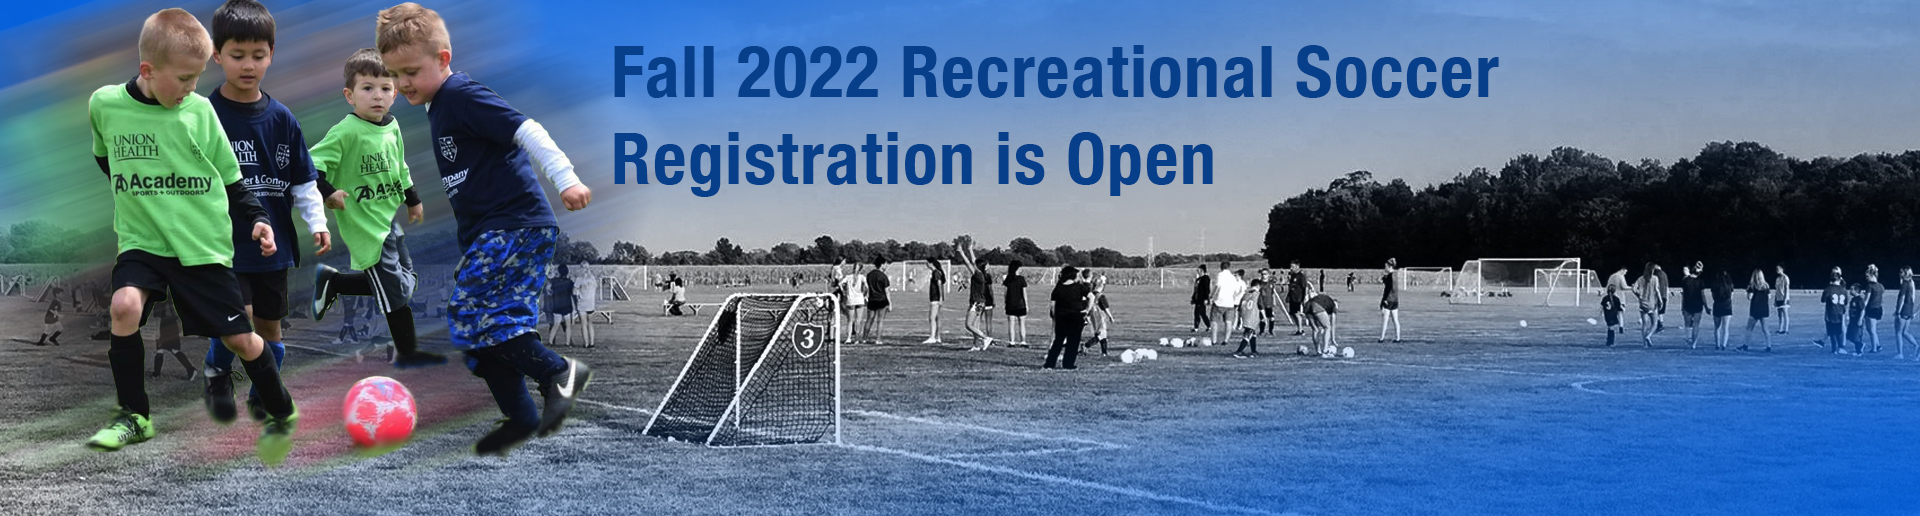 Fall 2022 Recreational Soccer